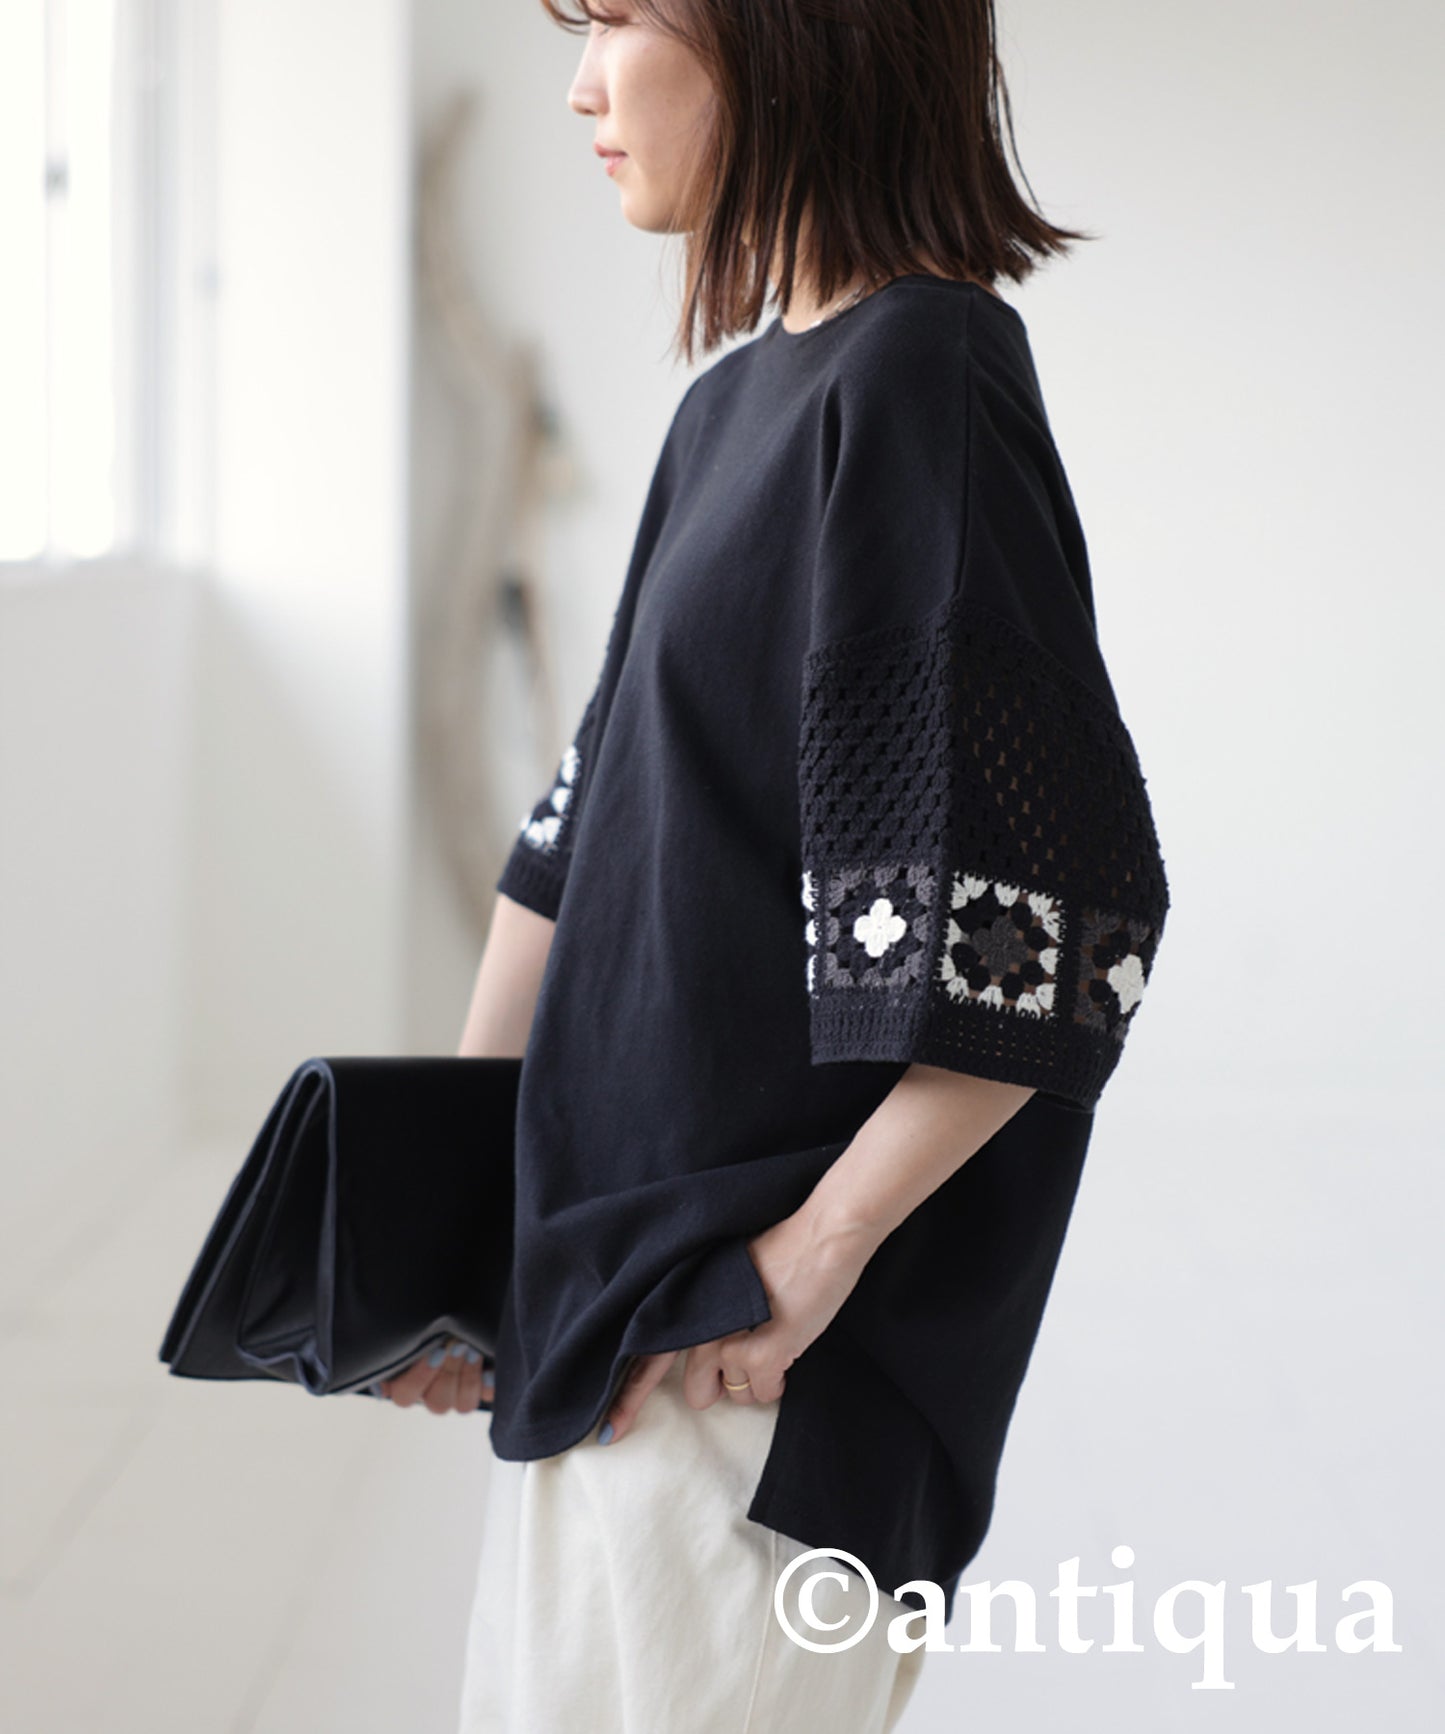 Openwork knitting Designed Sleeve Ladies Tops T -shirt